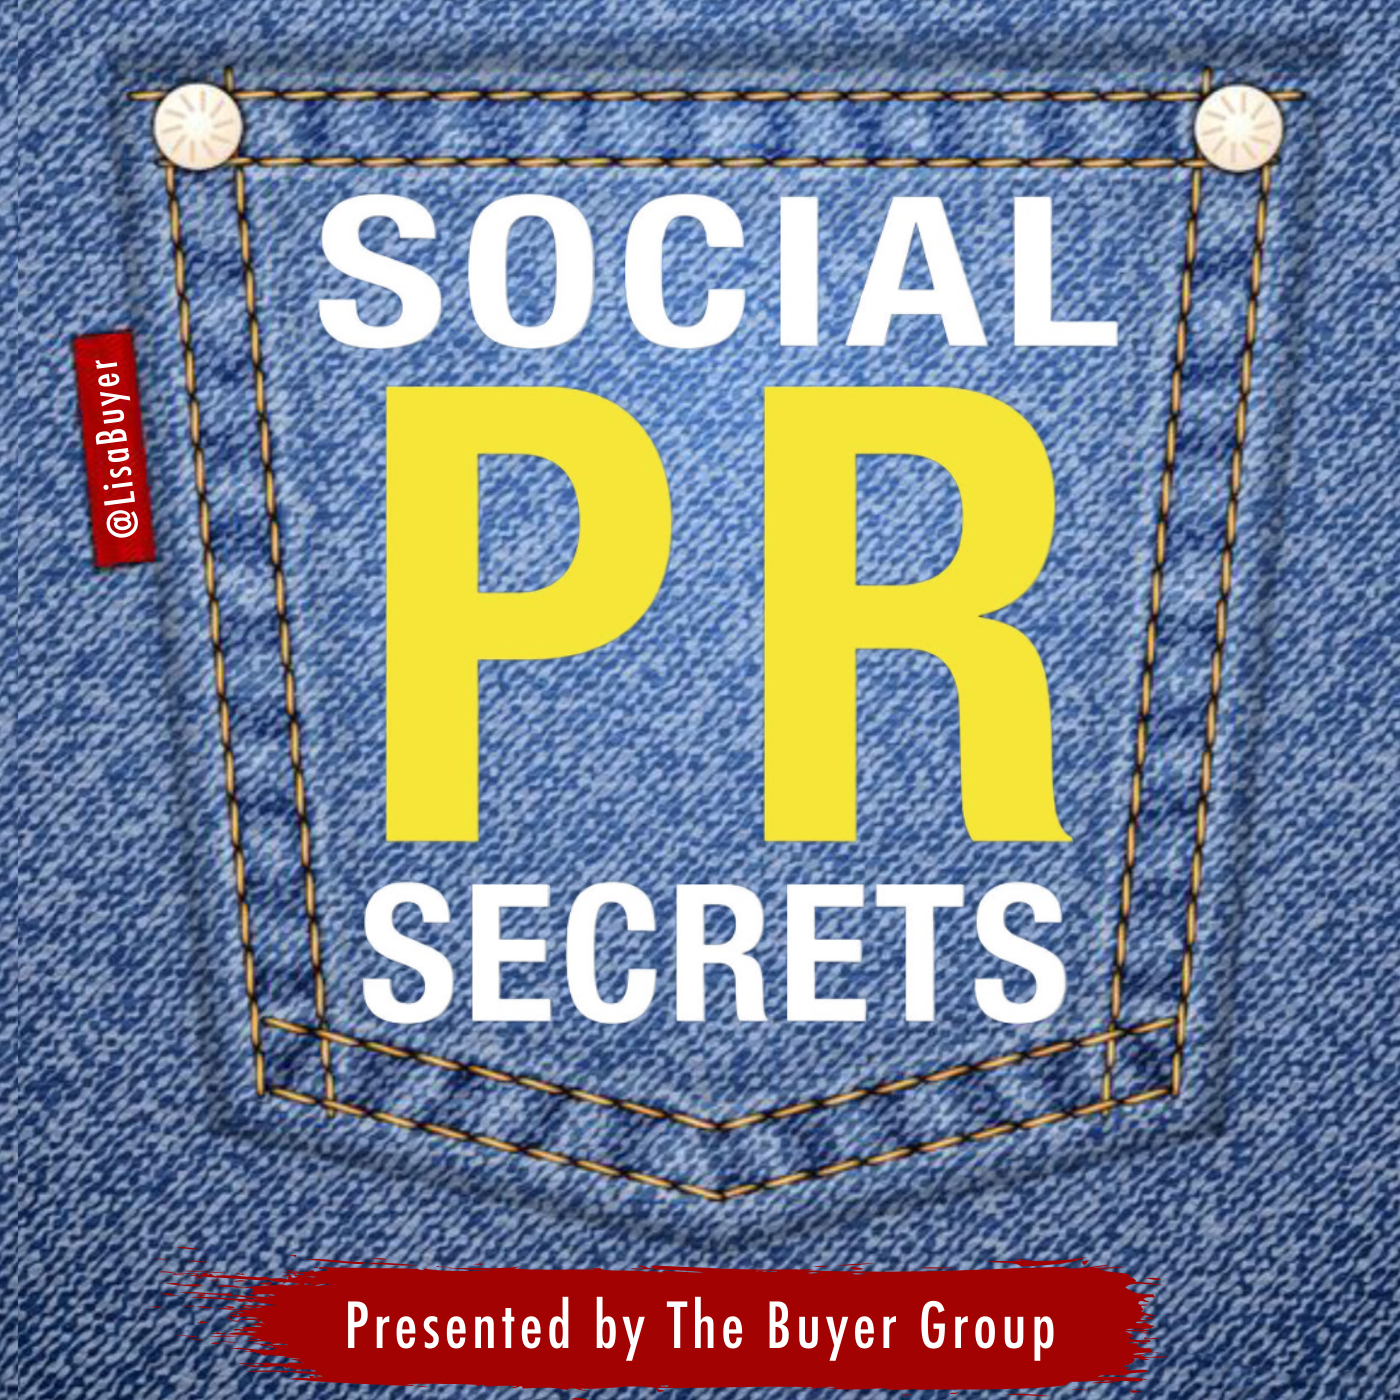 Social PR Secrets by Lisa Buyer